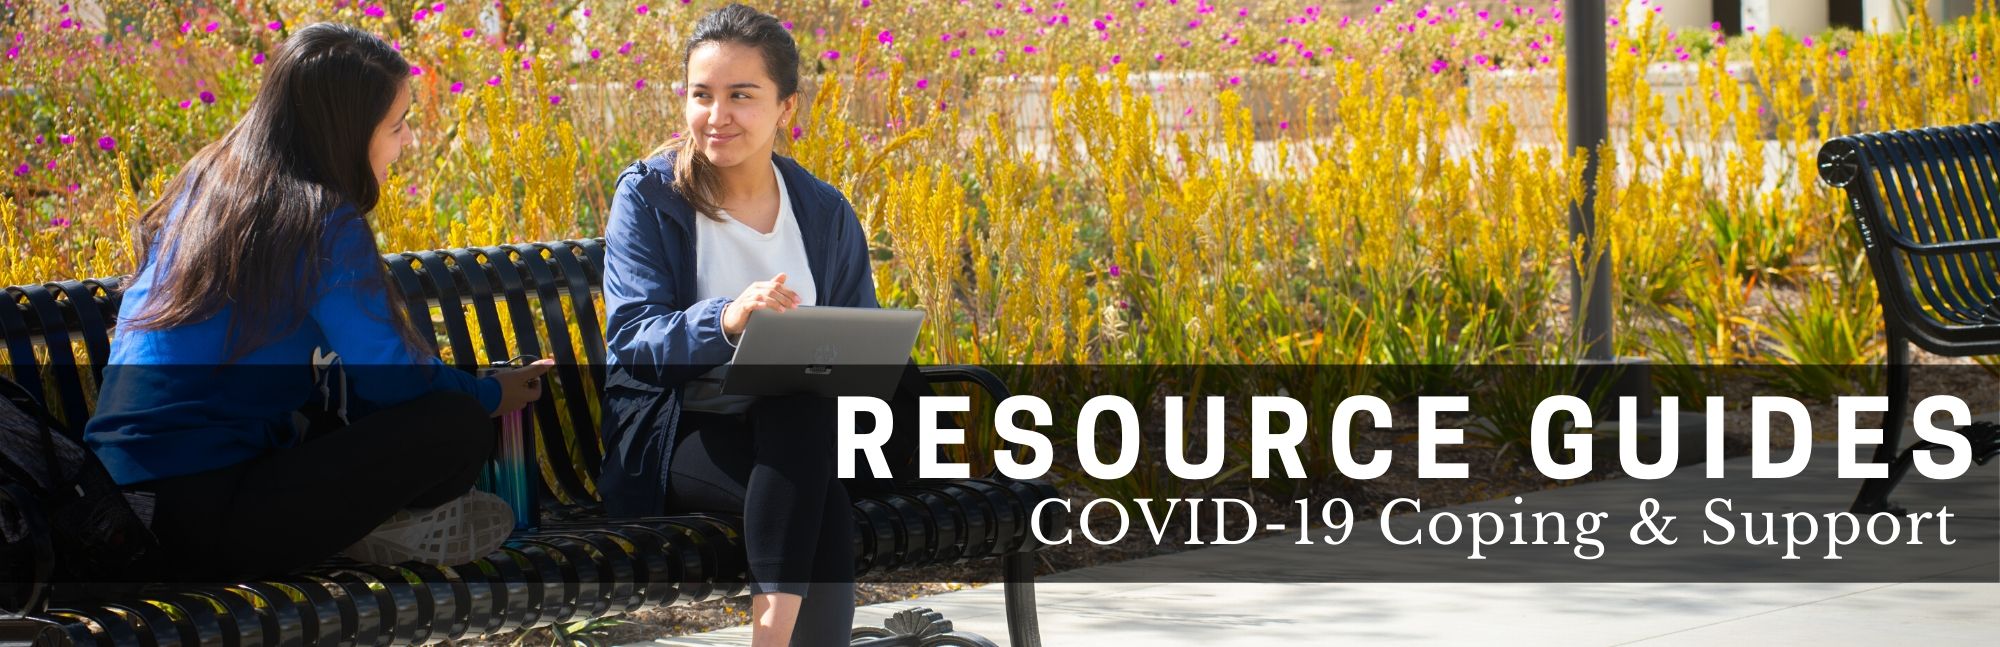 Covid-19 Resource Guide.jpg